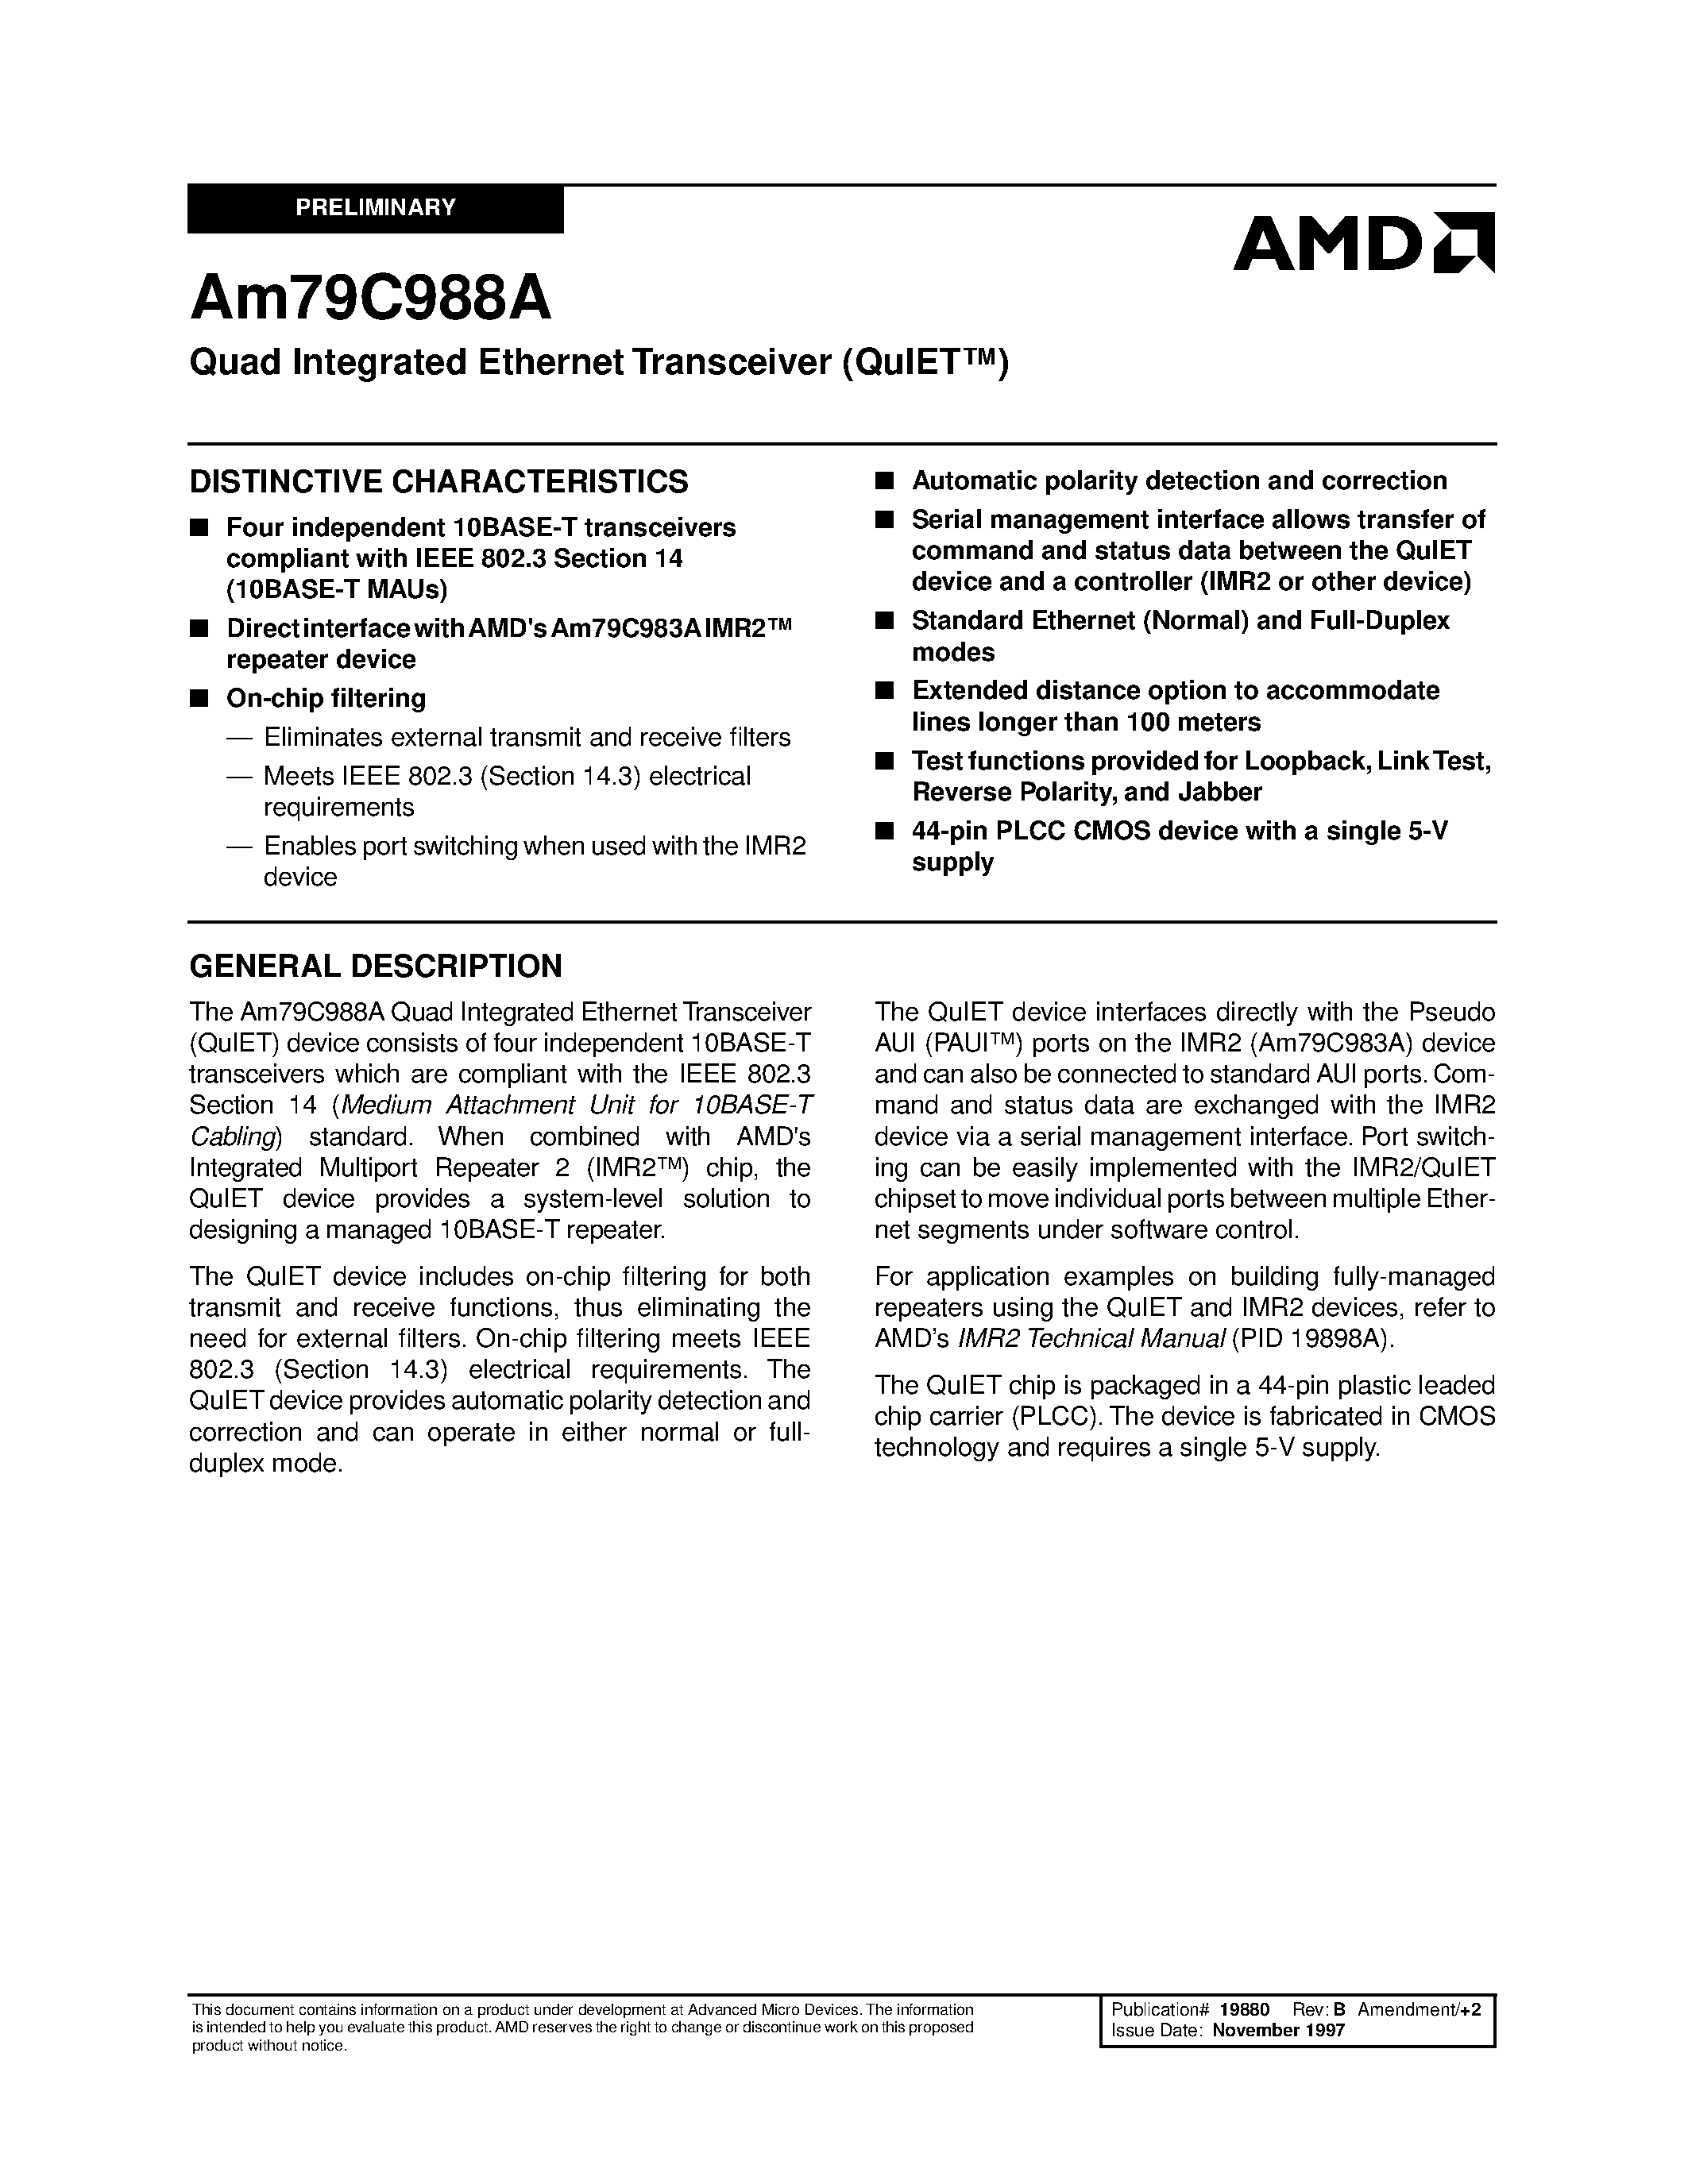 Datasheet AM79C988A - Quad Integrated Ethernet Transceiver (QuIET) page 1